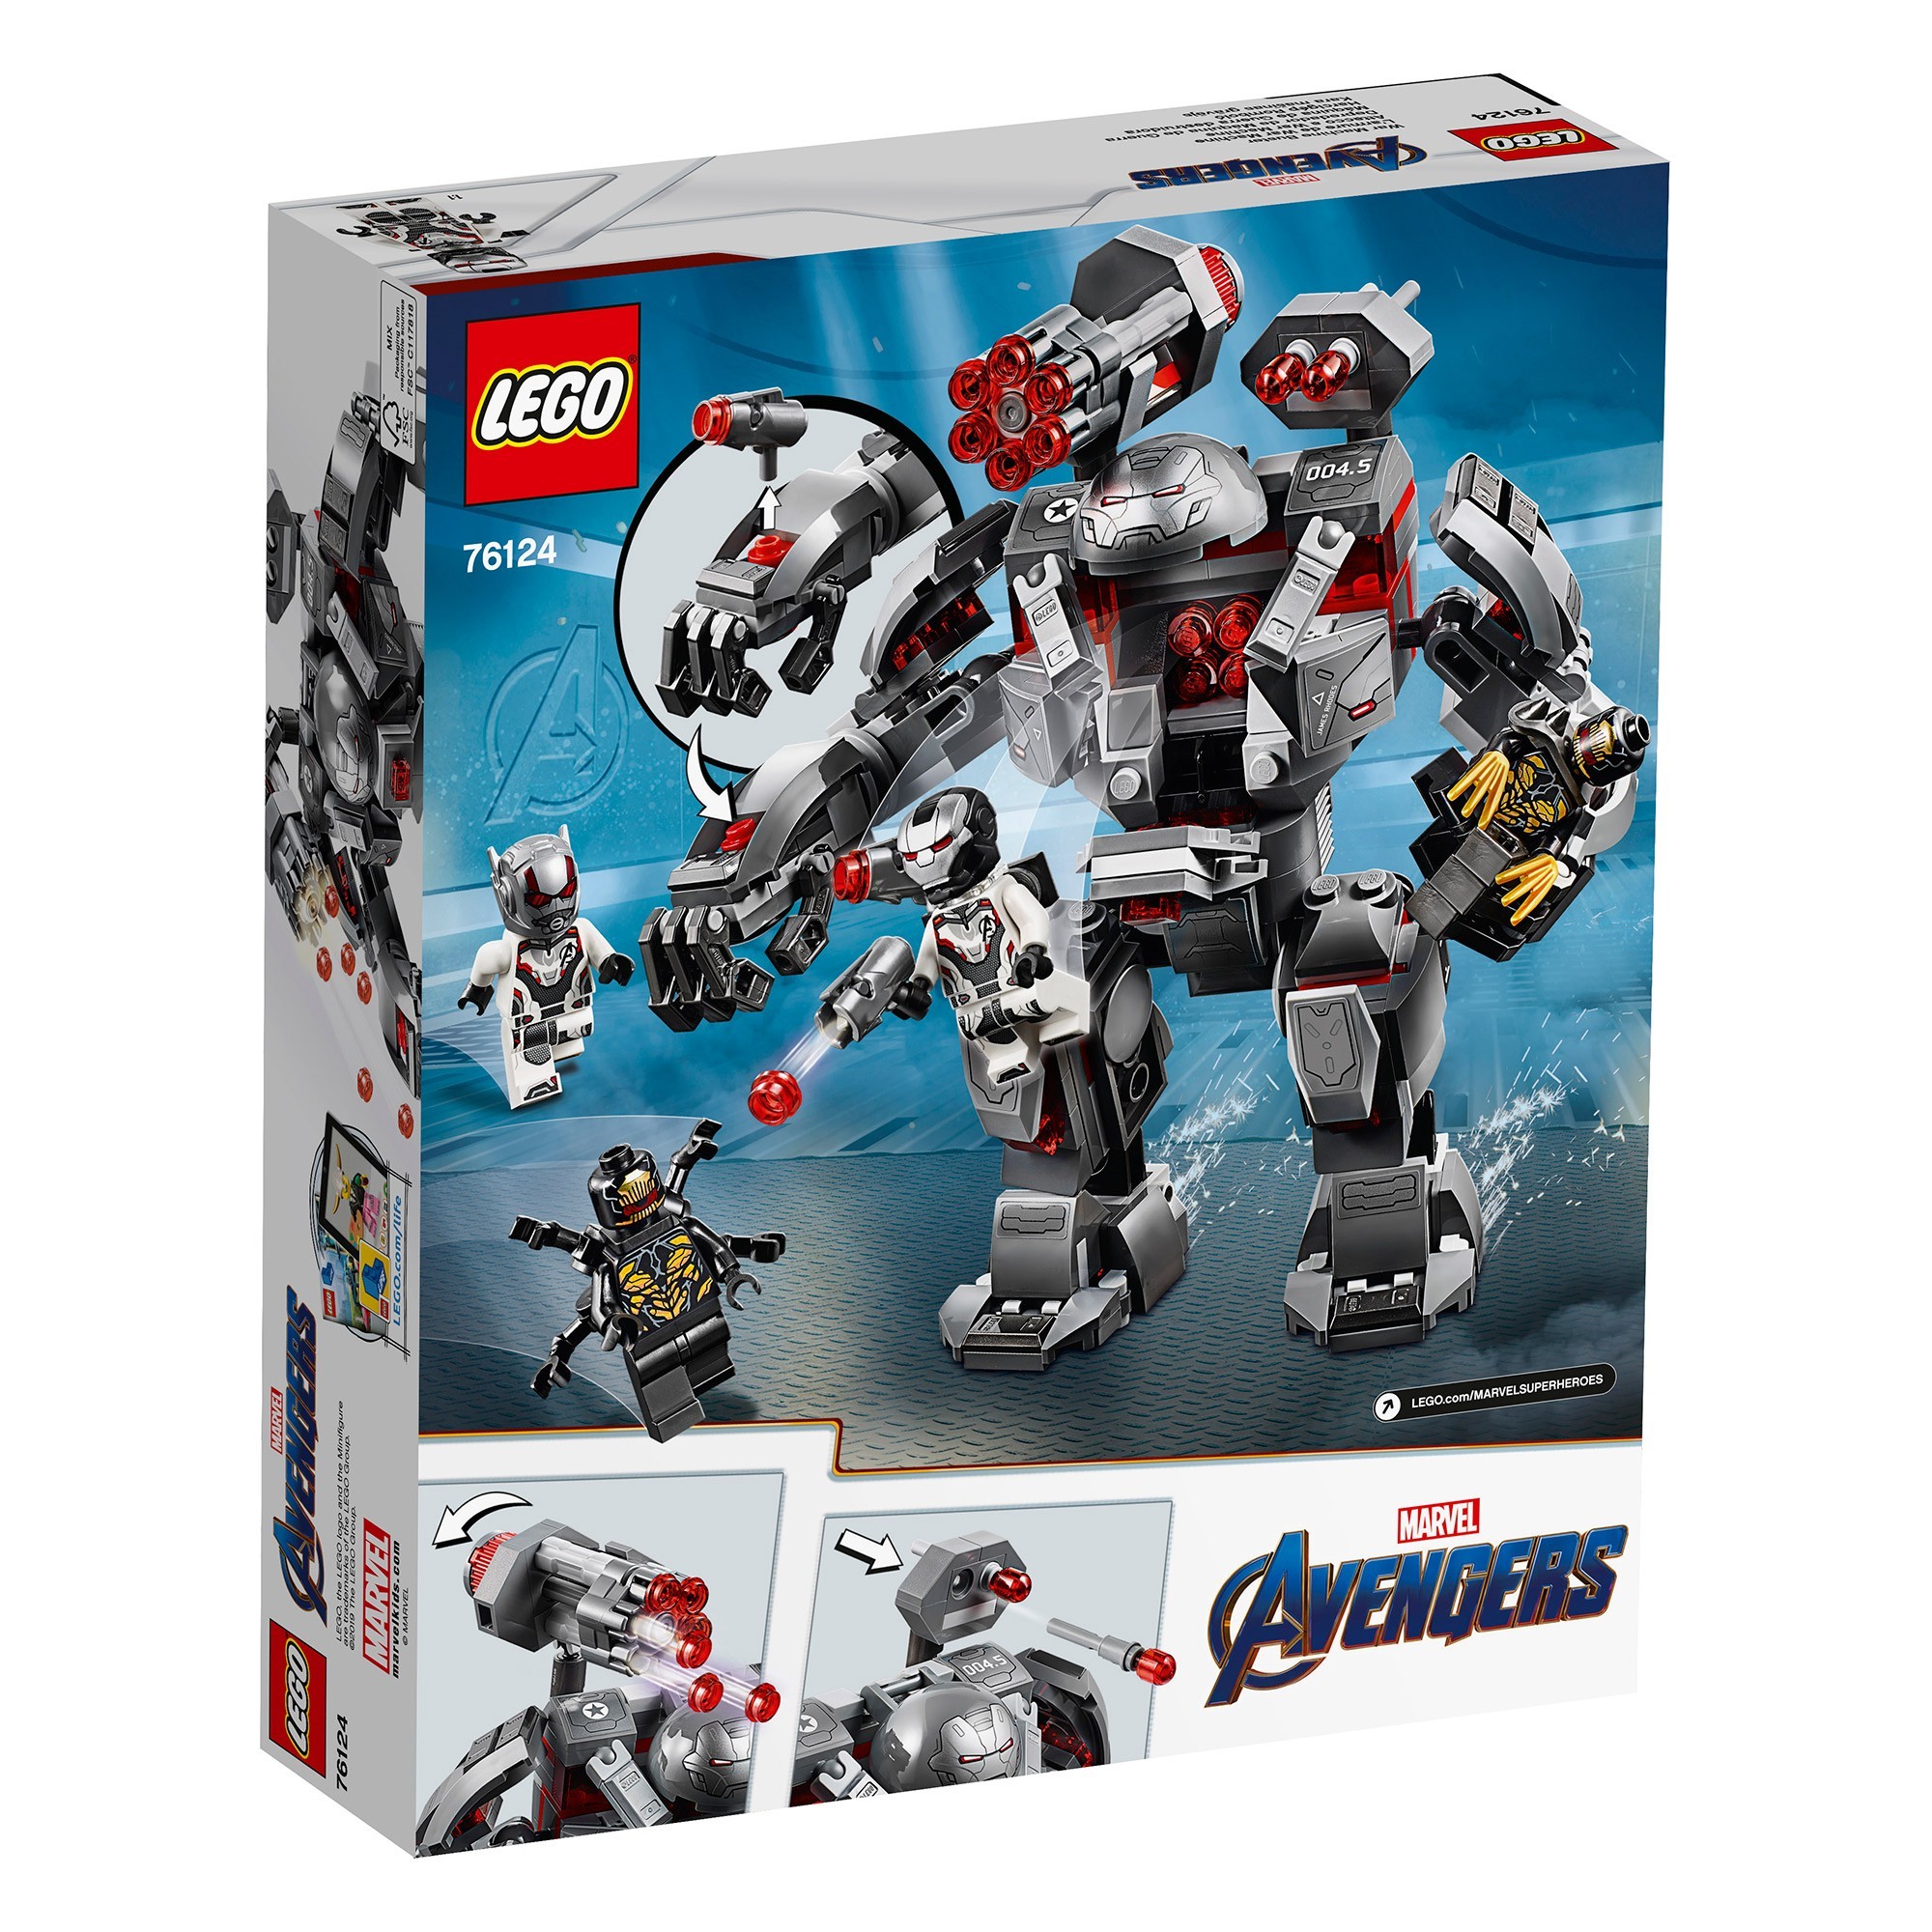 LEGO® - Marvel Avengers - 76124 War Machine Buster